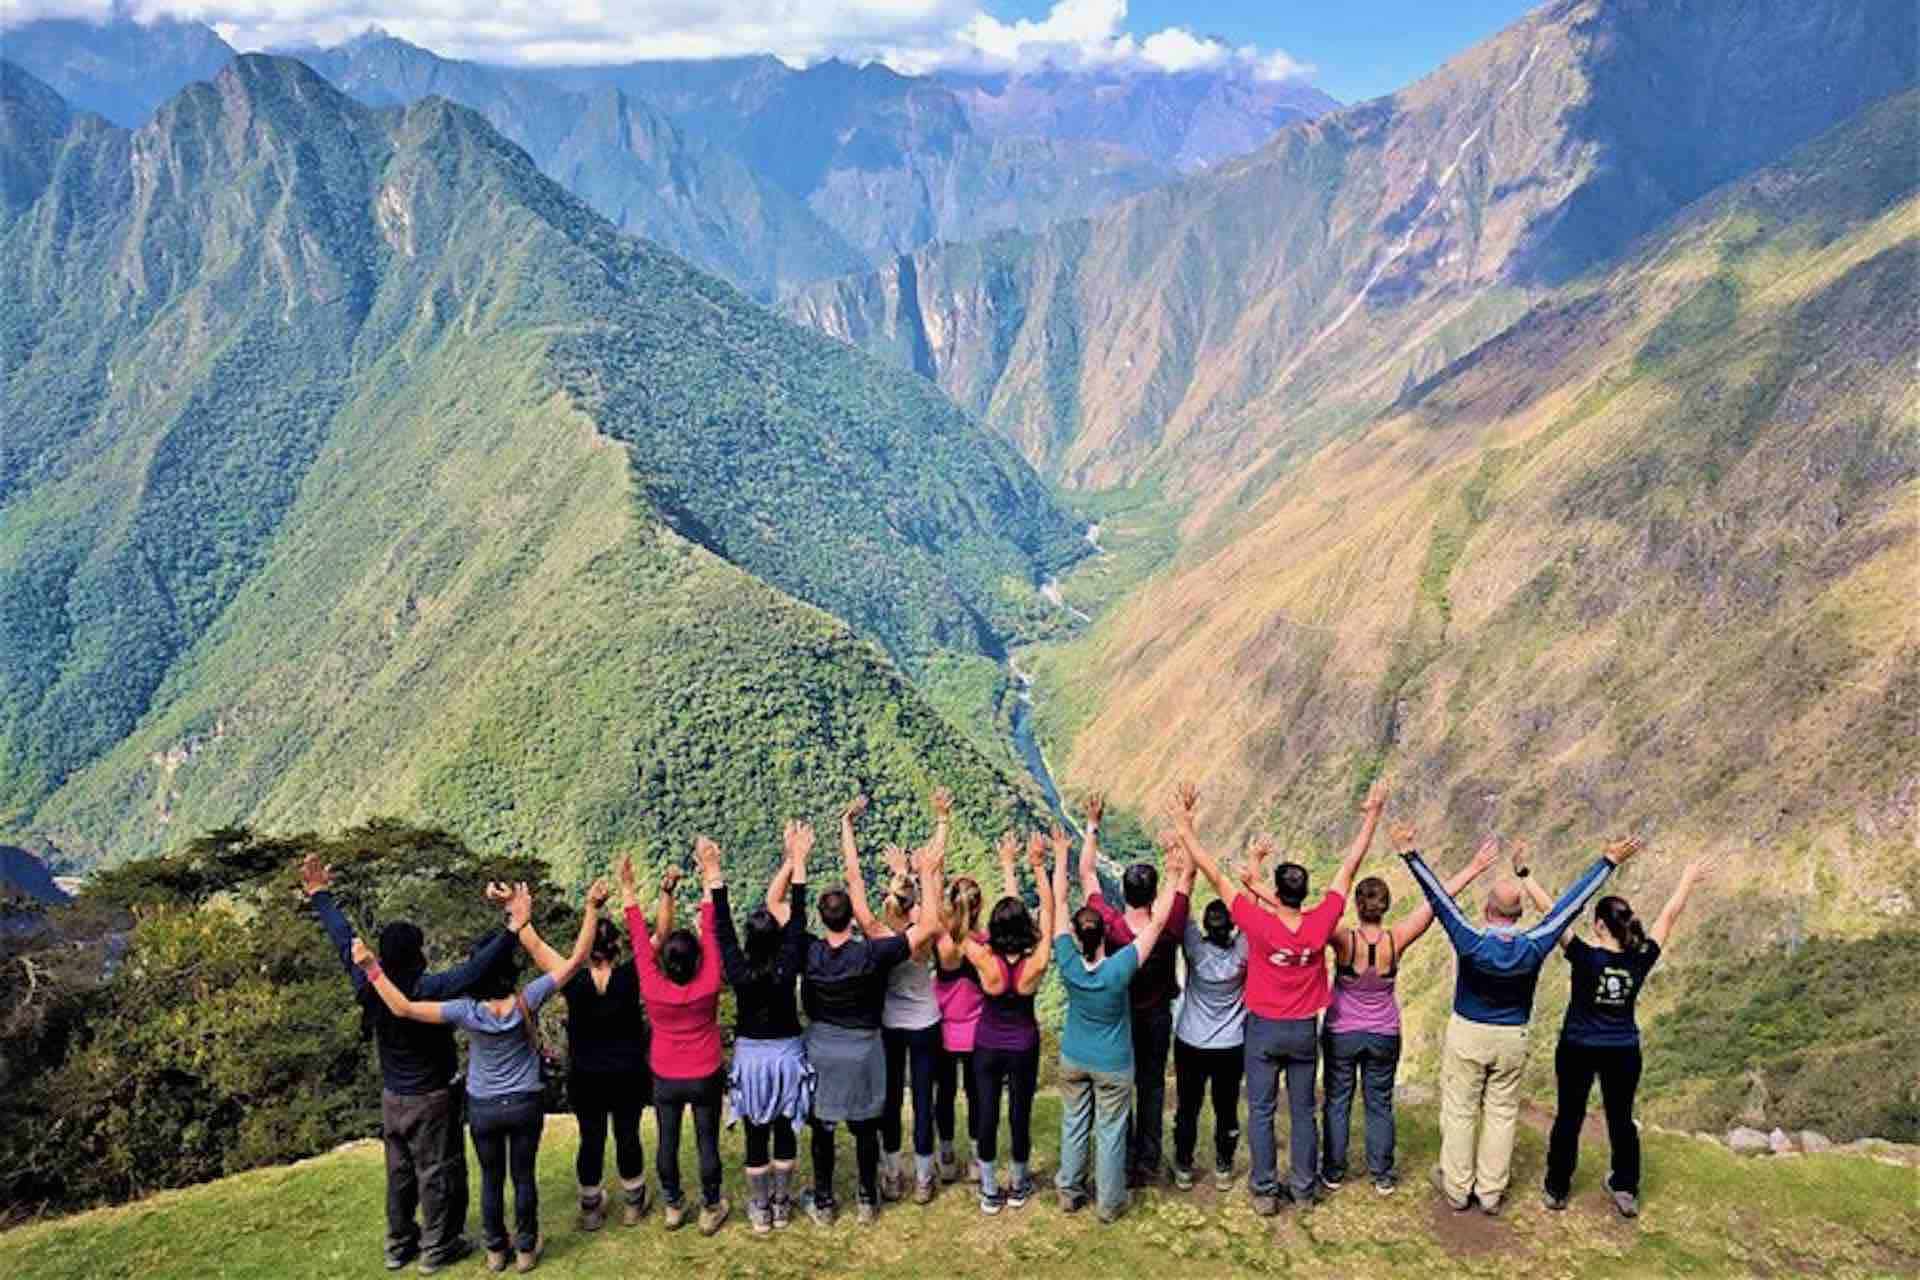 Machu Picchu Inca Trail group photo